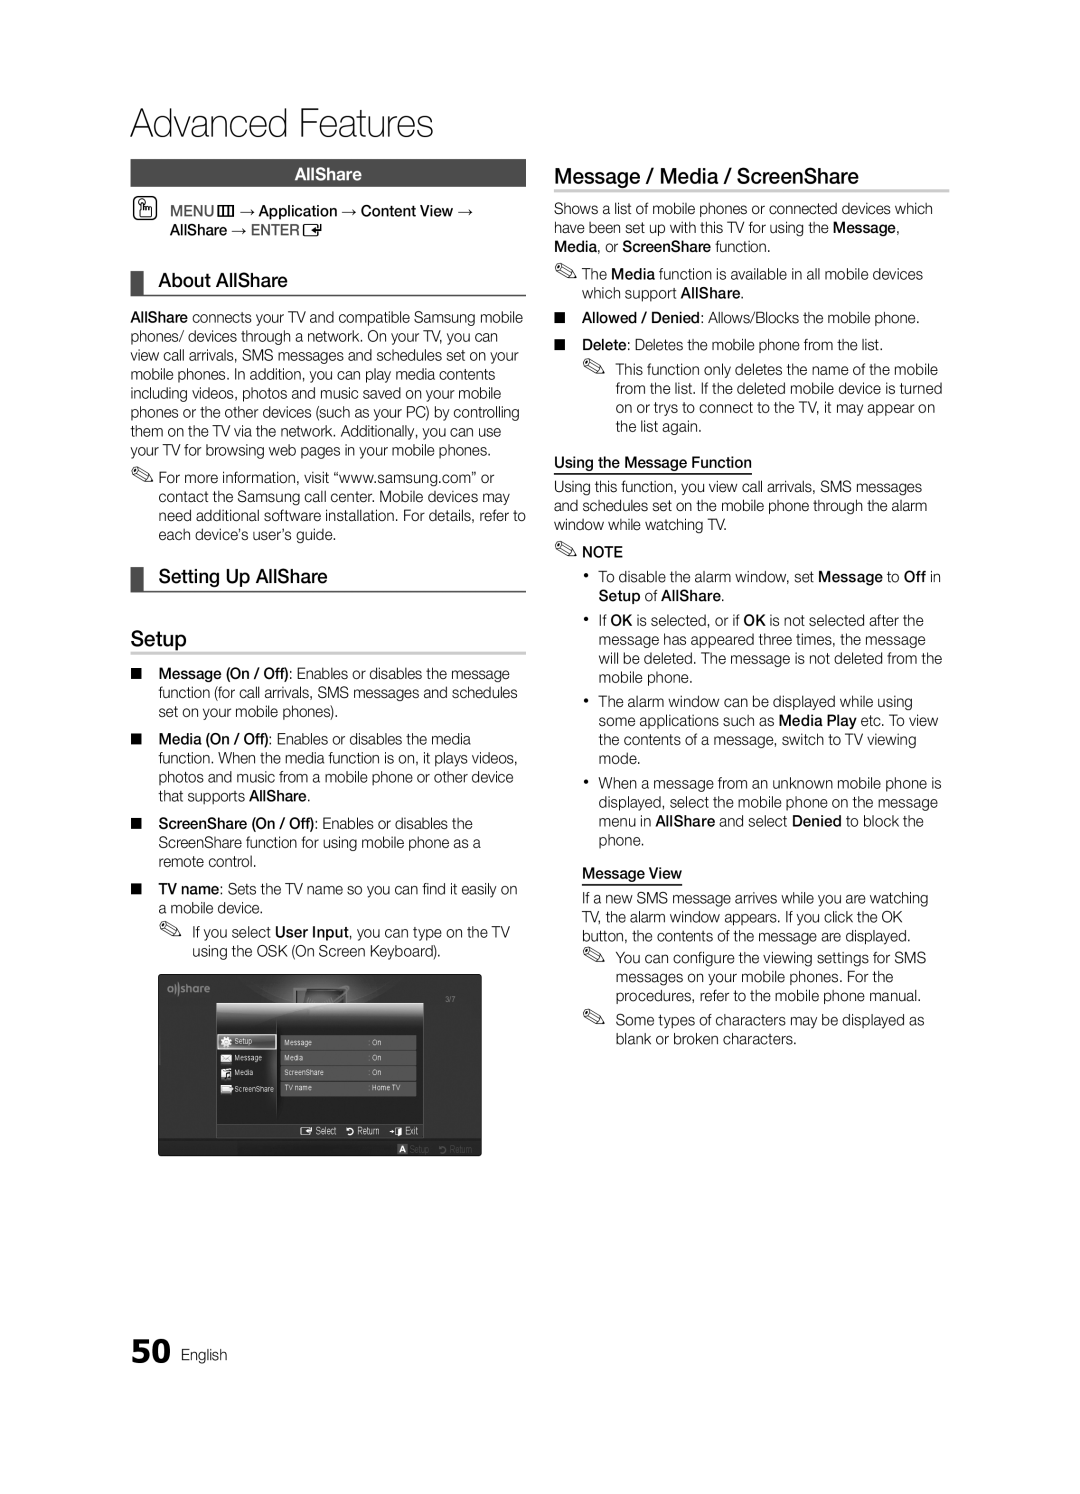 Samsung BN68-02711B-04 Setup, Message / Media / ScreenShare, About AllShare, Setting Up AllShare, Advanced Features 